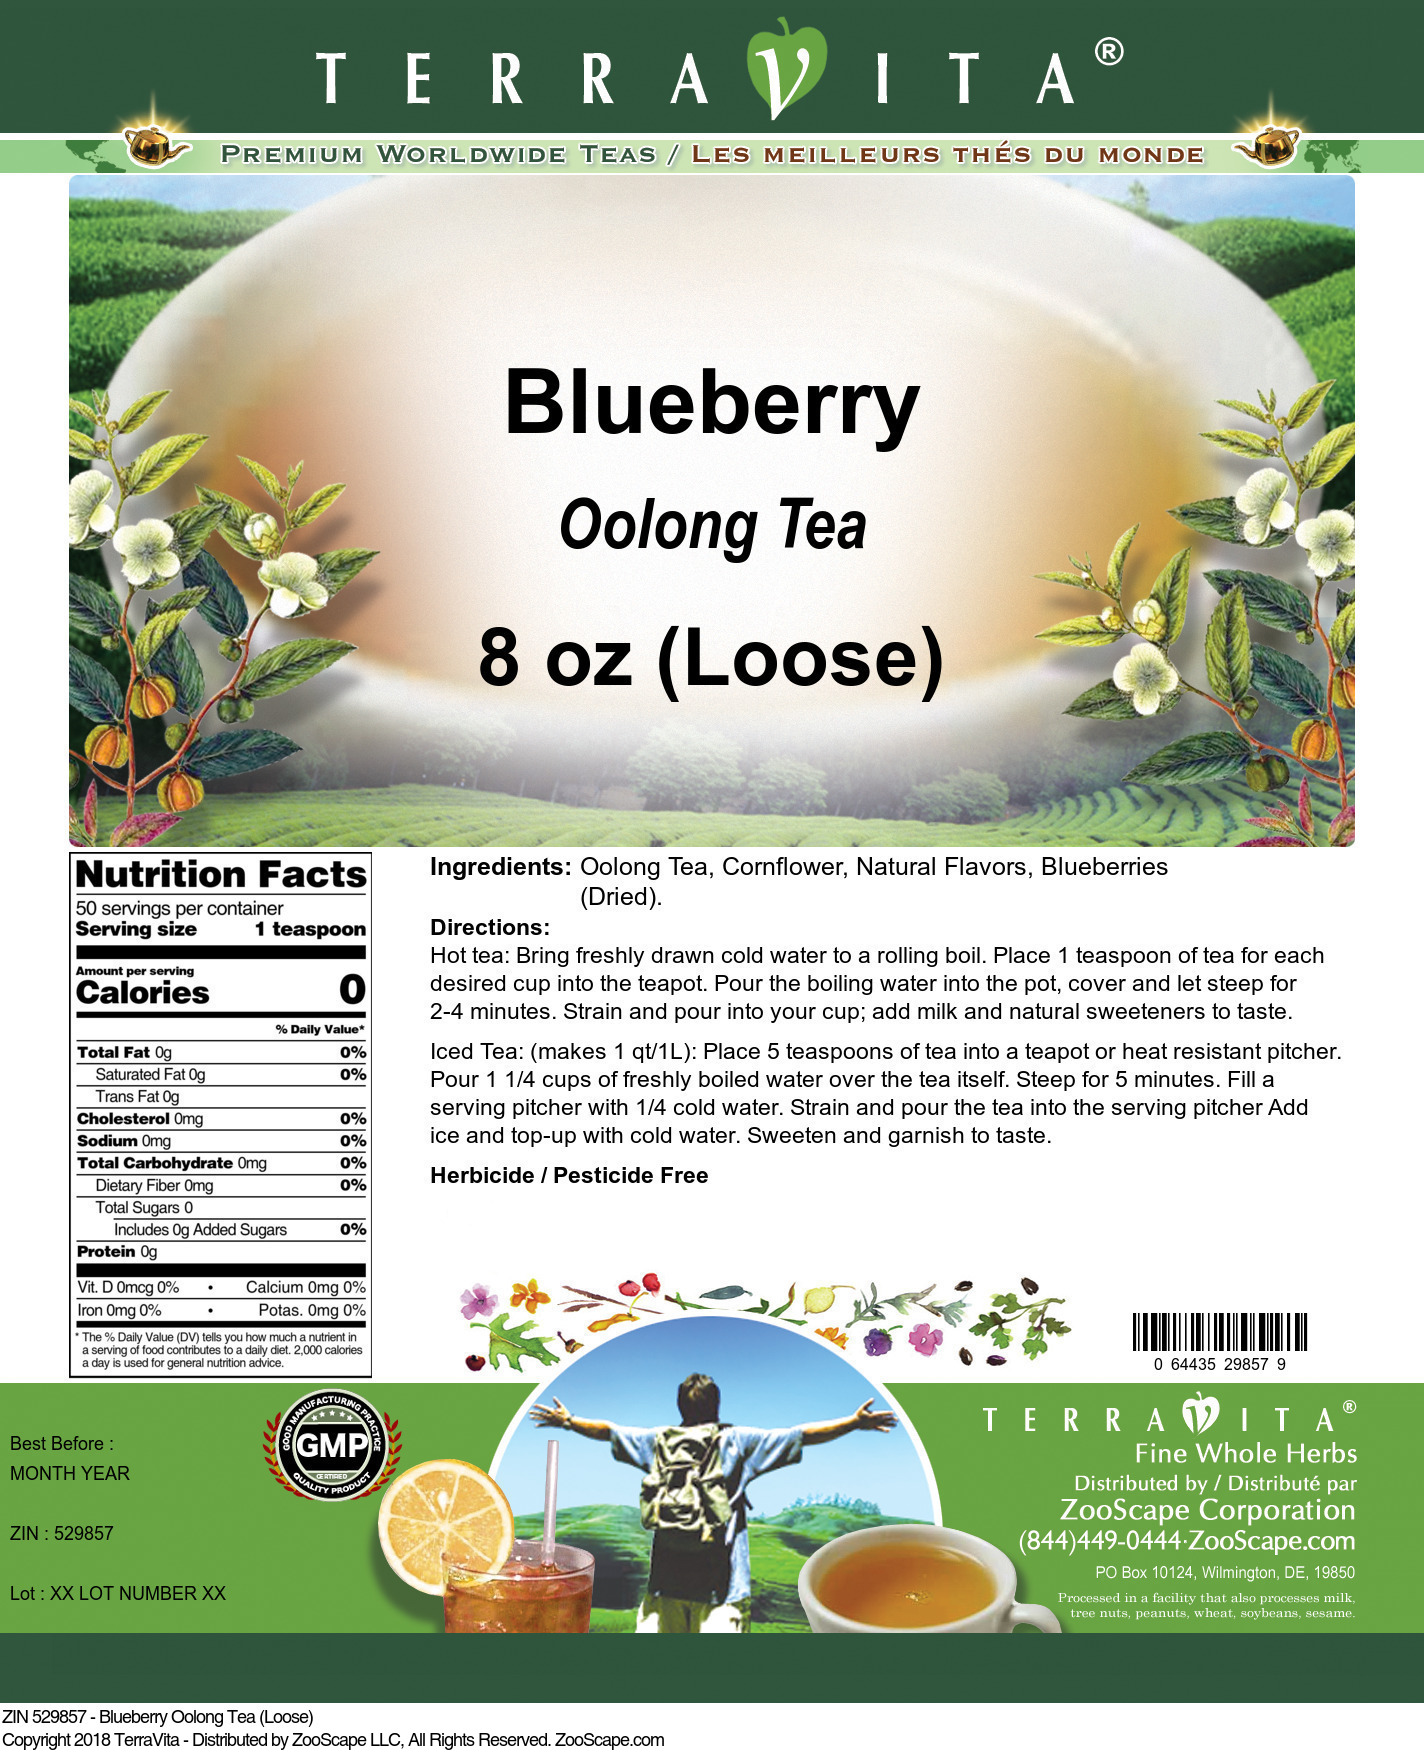 Blueberry Oolong Tea (Loose) - Label